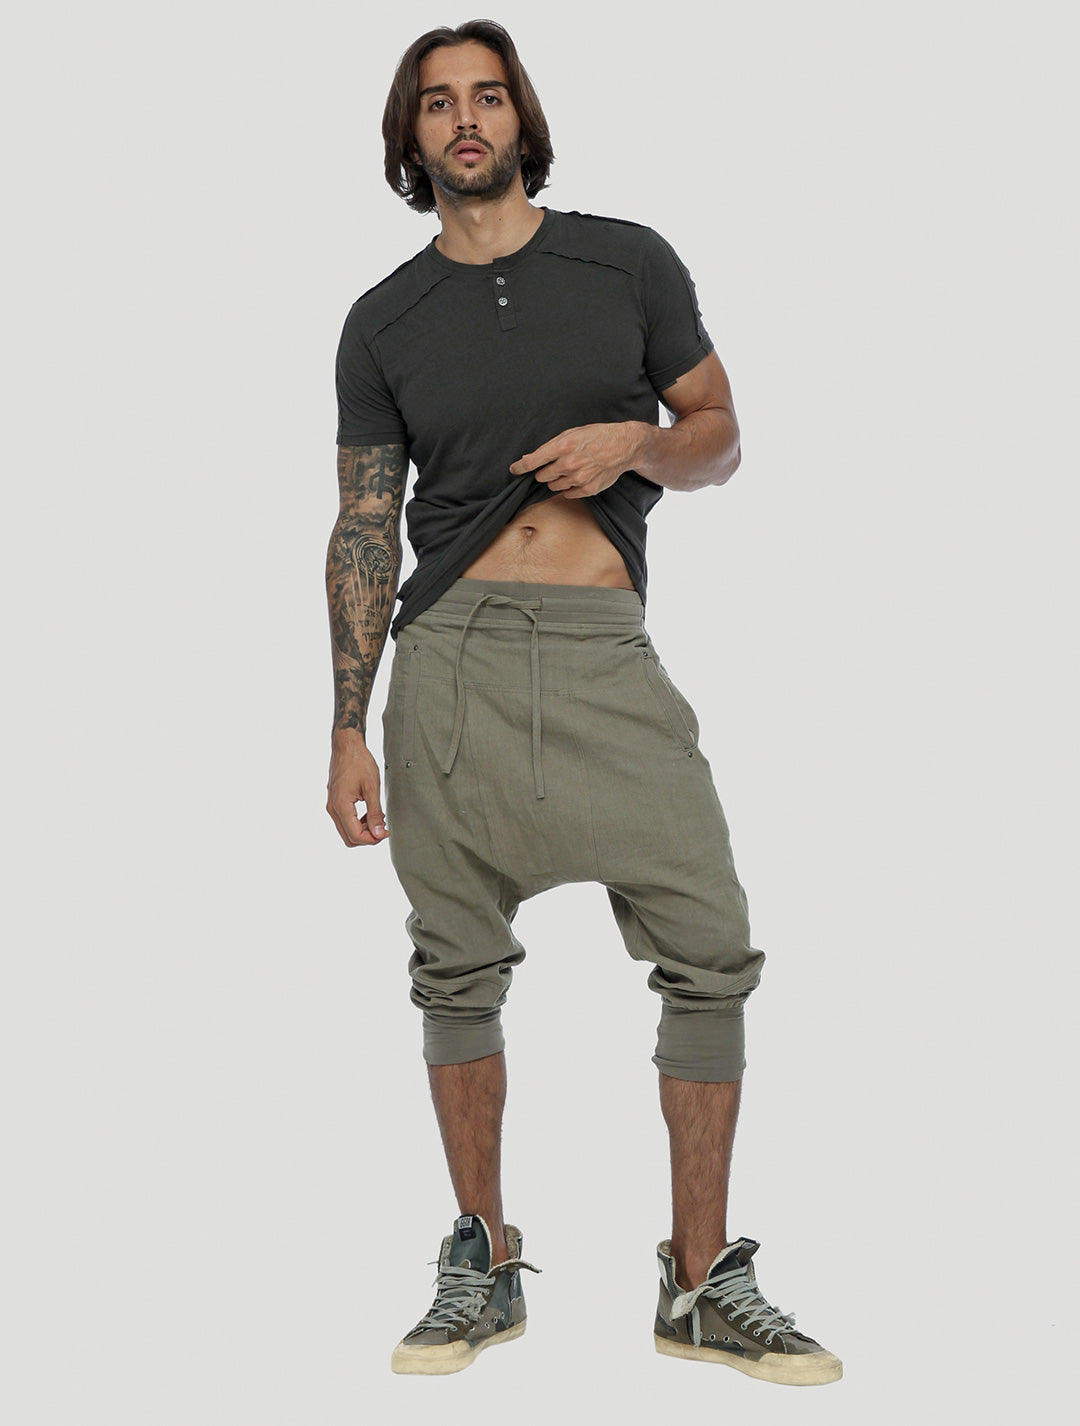 Men 3/4 Length Cargo Pants Shorts Loose Casual Cotton Trousers Plus Size  Black | eBay